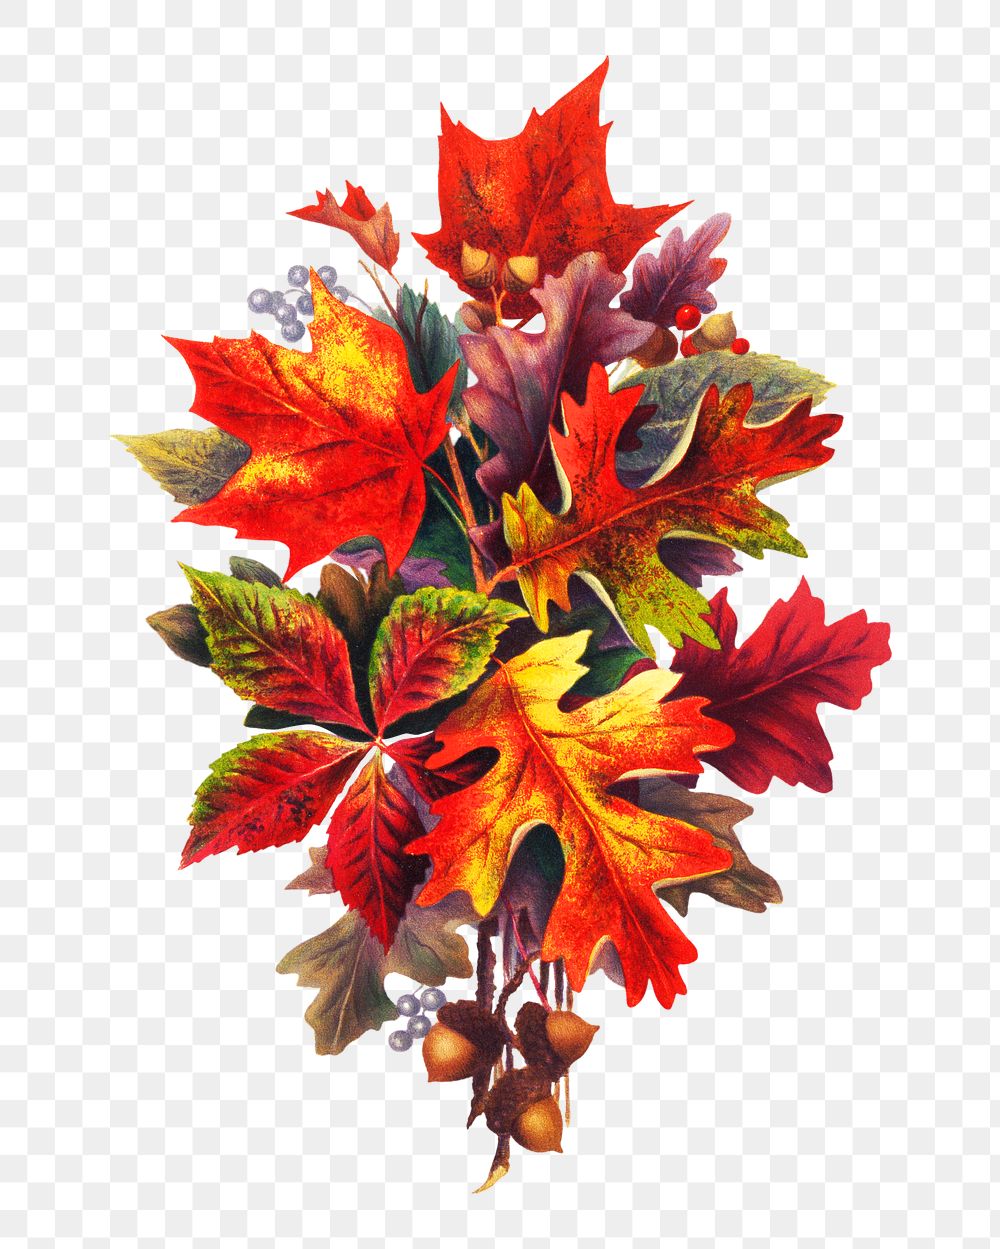 PNG Autumn leaves, vintage botanical illustration by S. L. Bush, transparent background. Remixed by rawpixel.